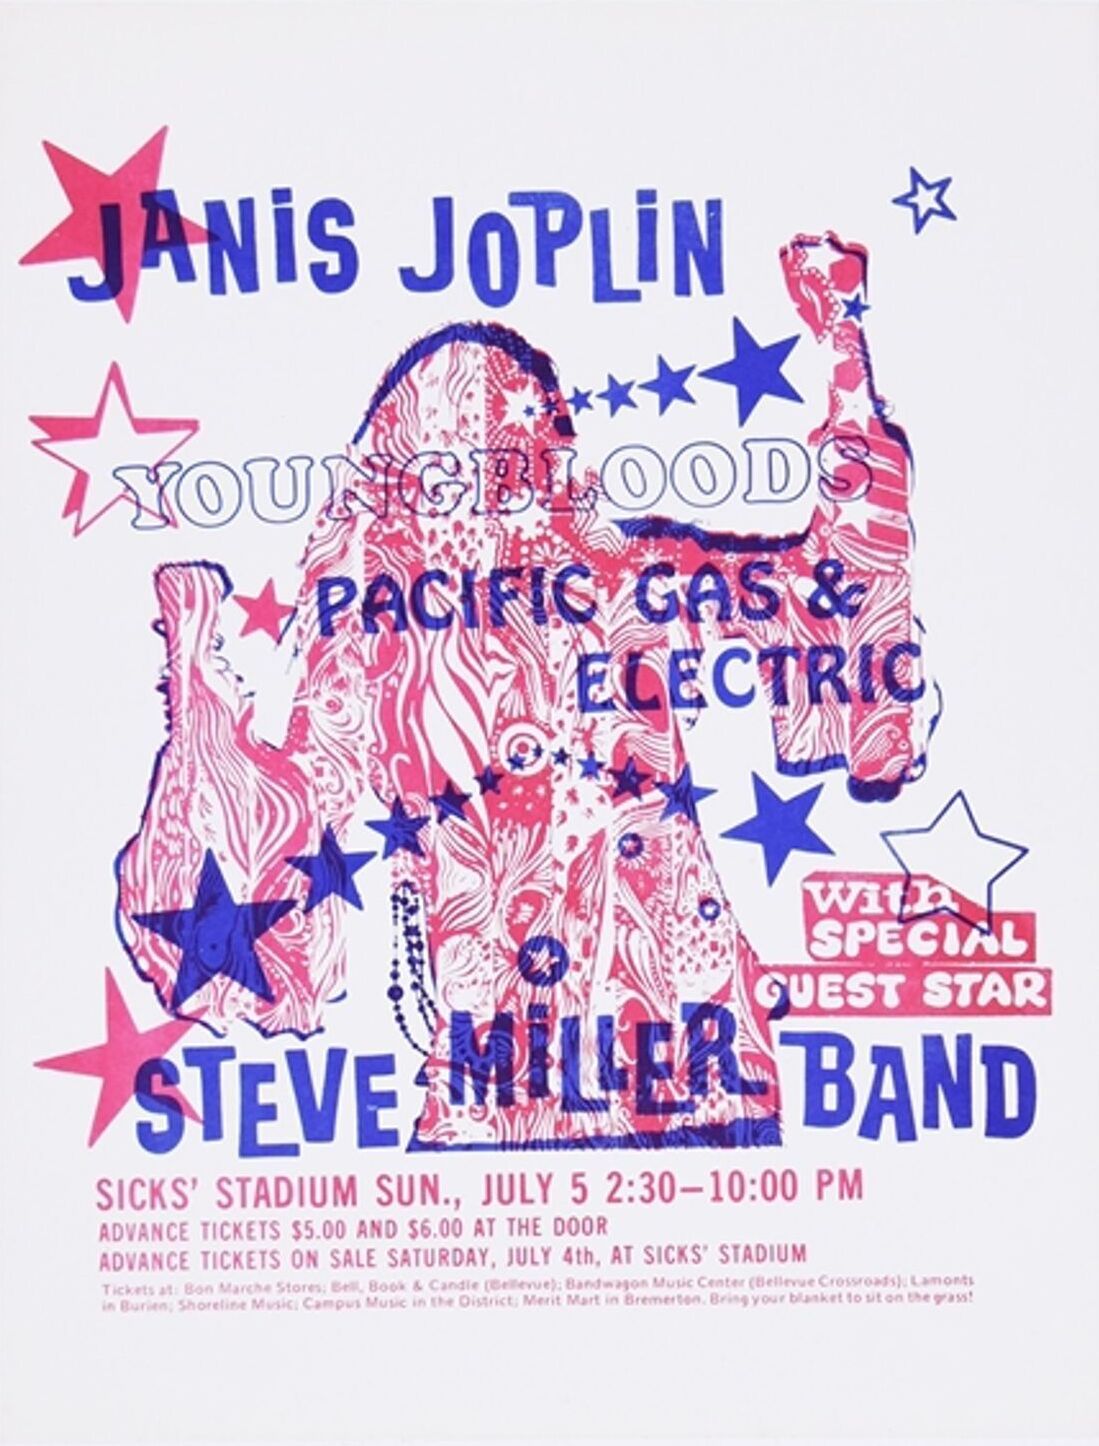 Janis Joplin Sicks' Stadium 1970 Concert Poster